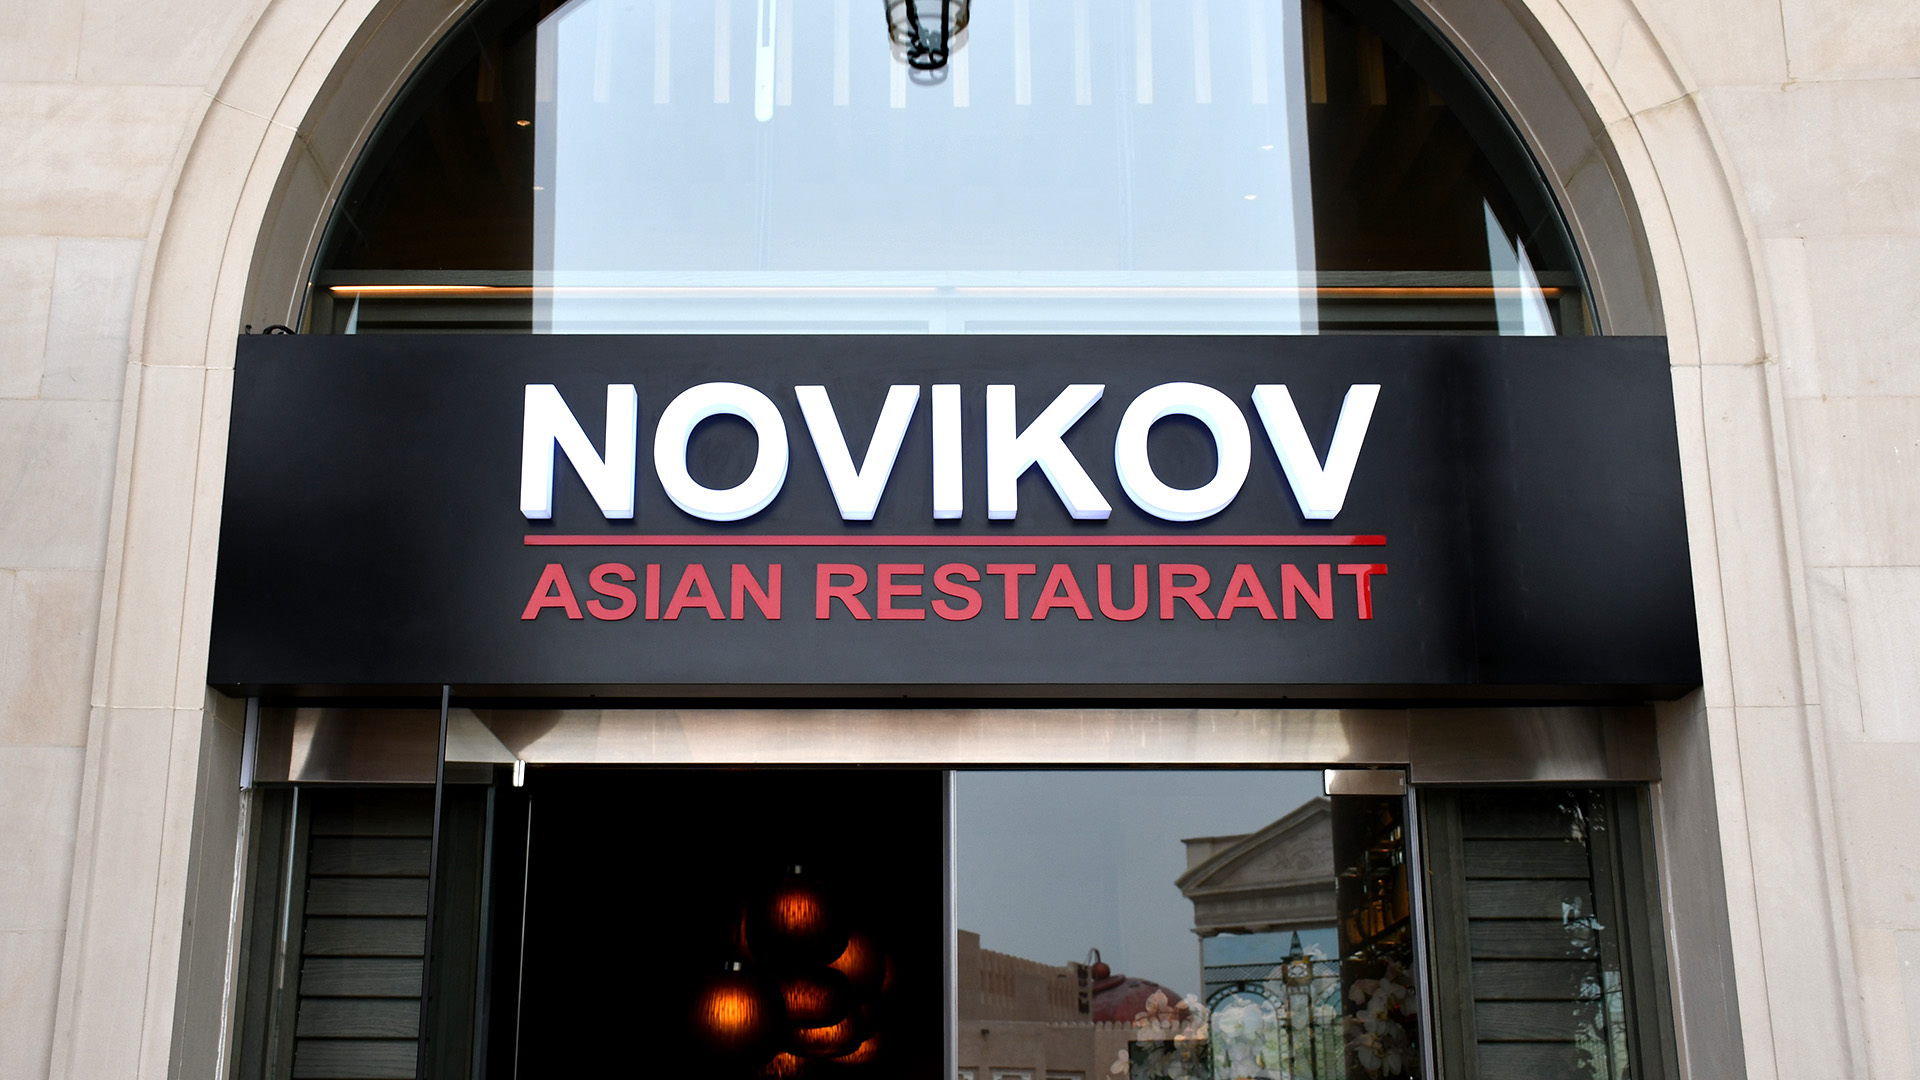 LED Lit Push Through shopfront signage for Novikov Asian Restaurant in Katara, fabricated and installed by ME Visual, Qatar